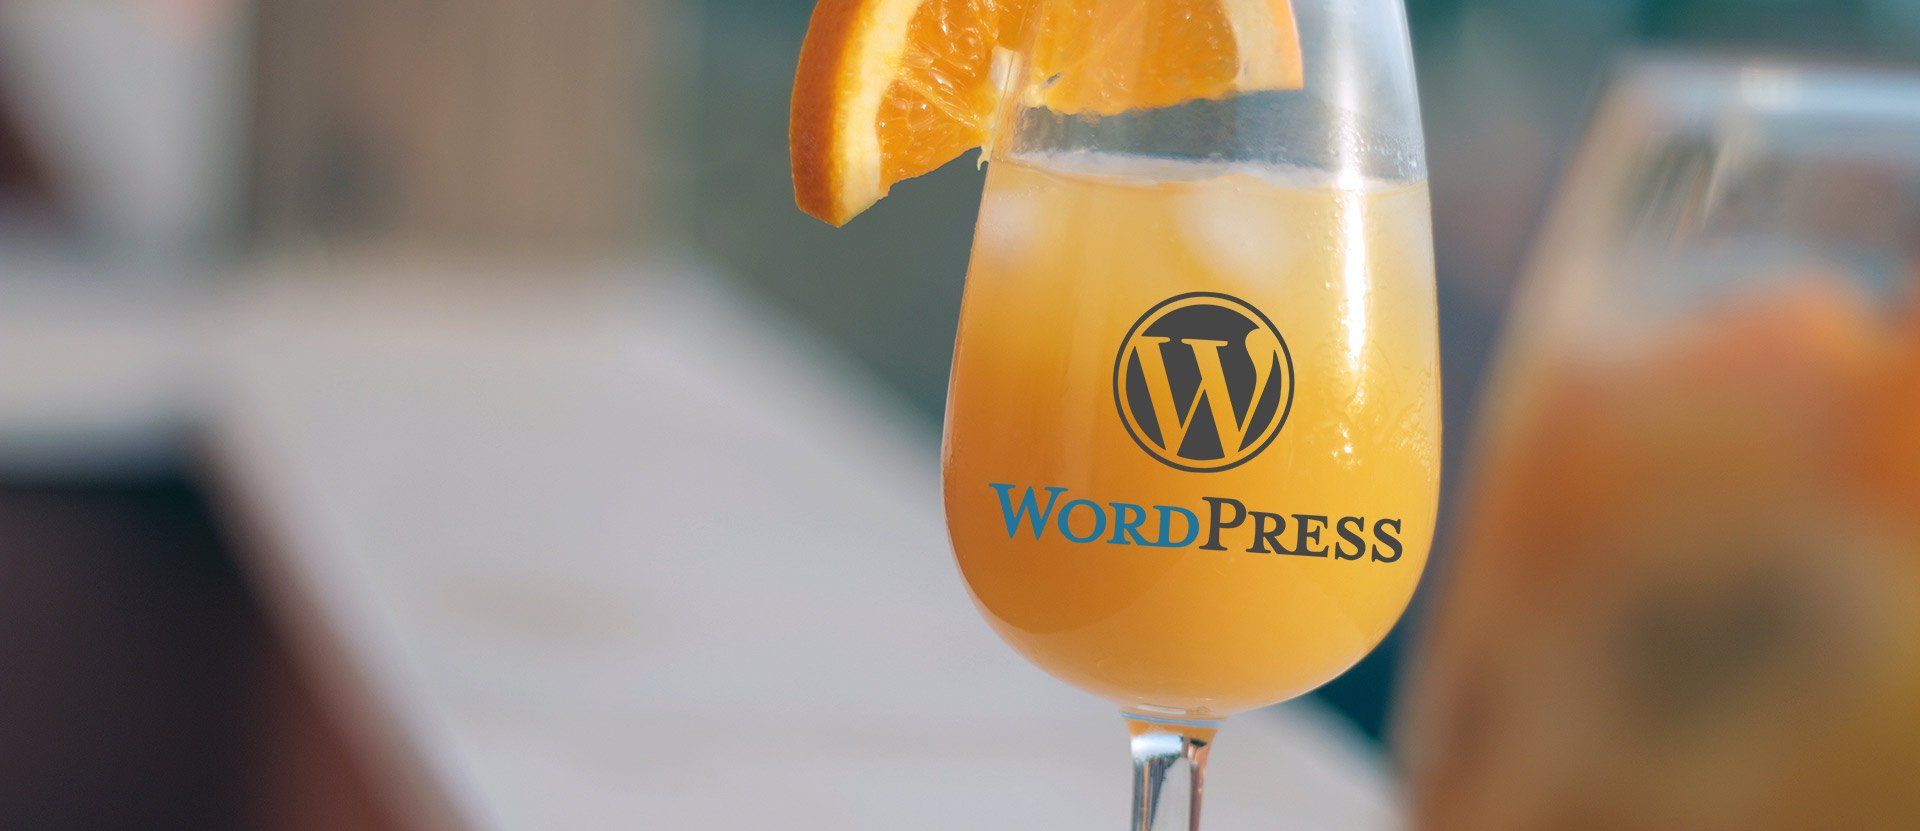 WordPress logo showing on a glass of juice